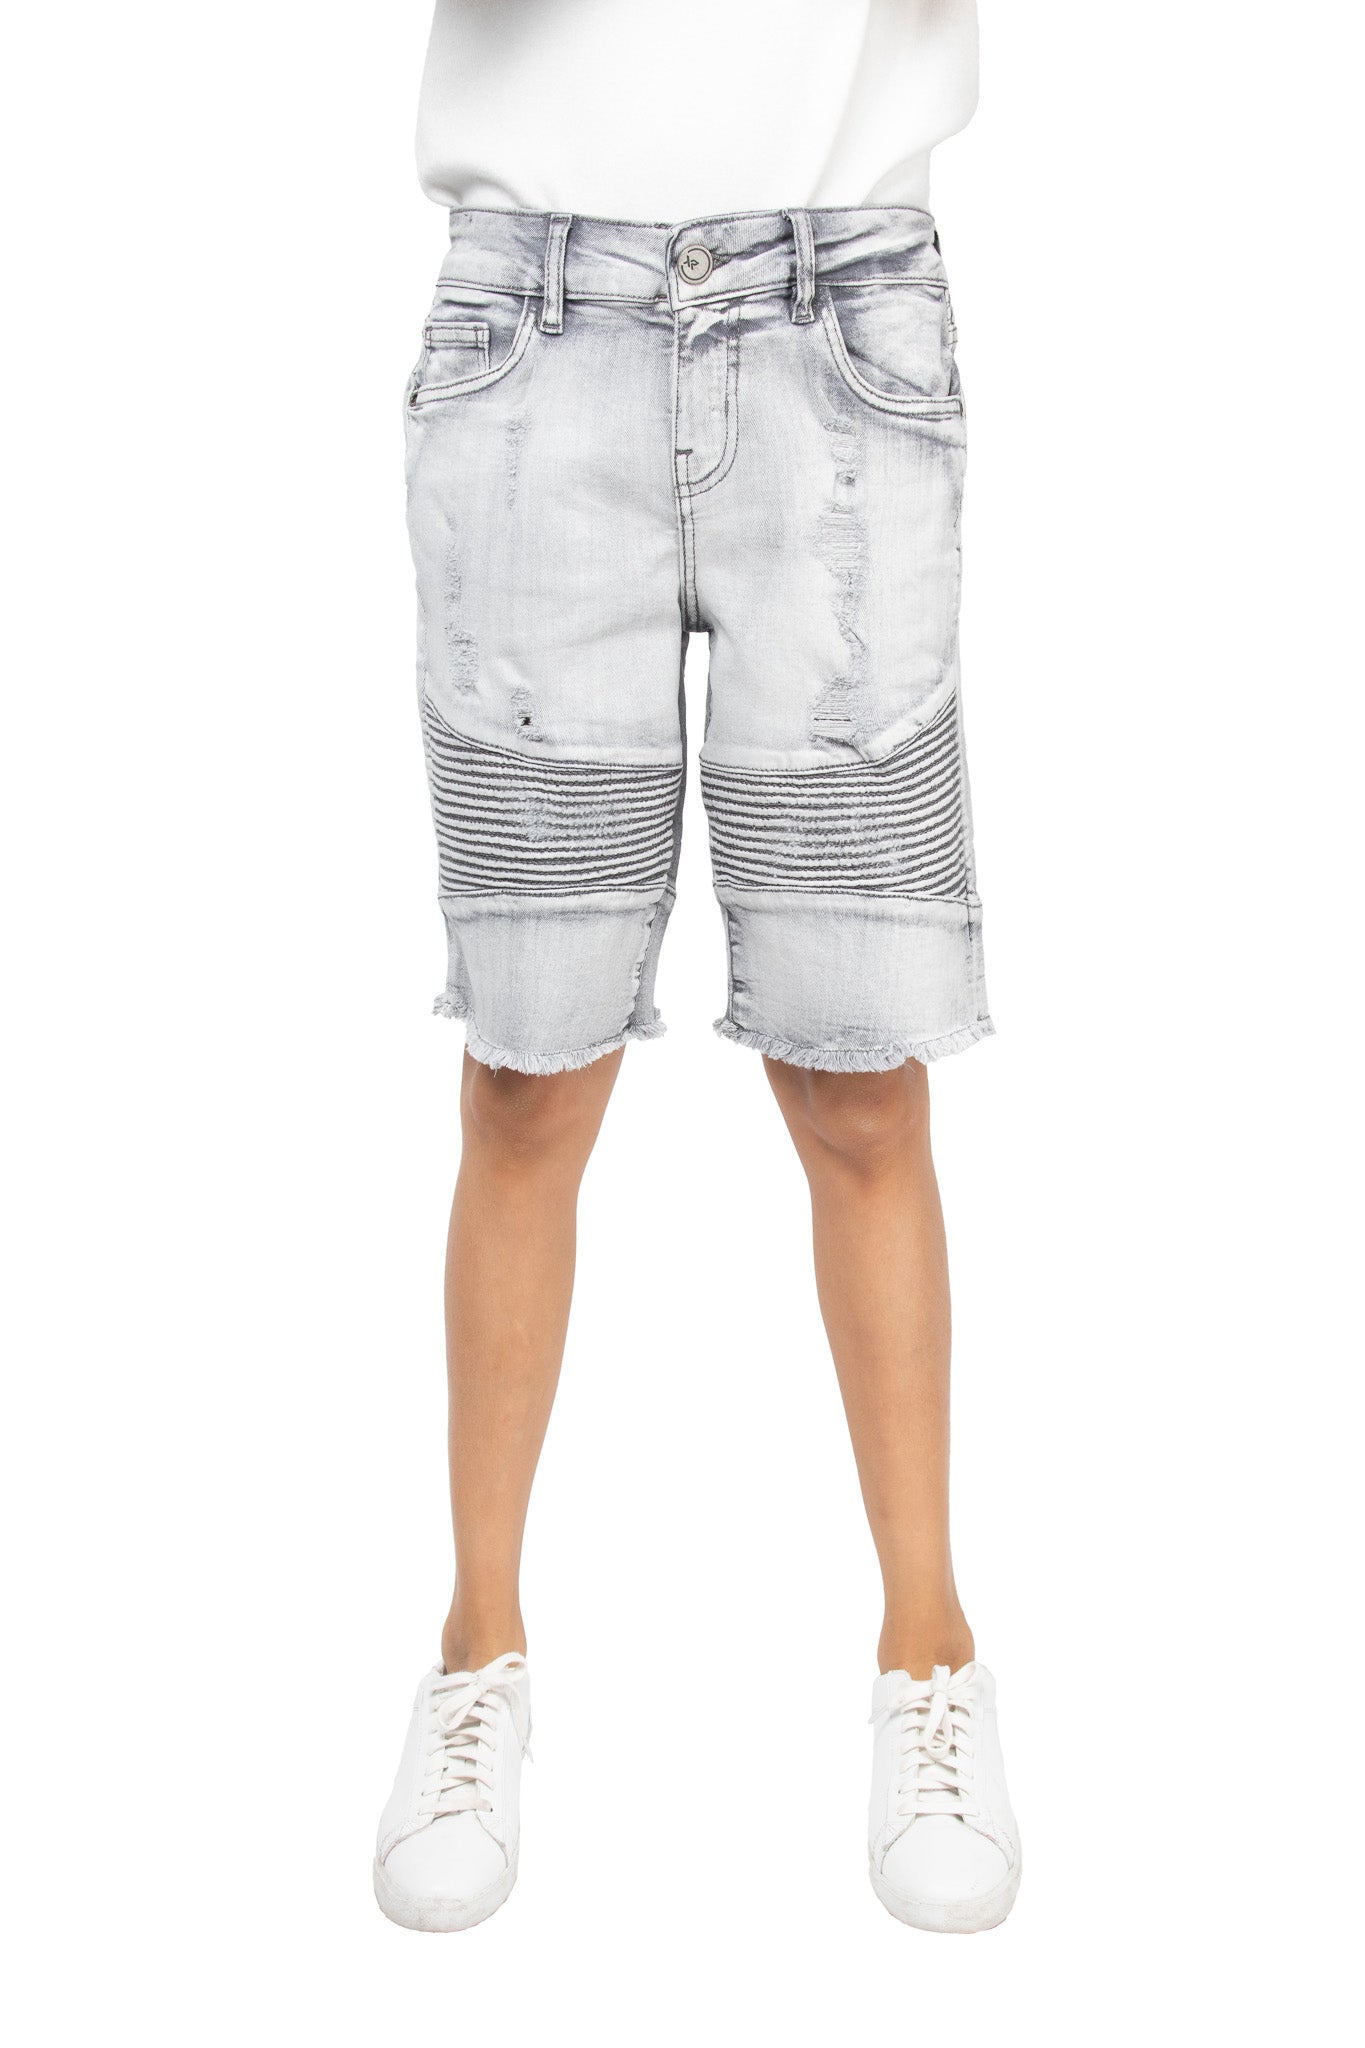 ZLZ Stretch Jean Short for Men, Men's Casual Regular Fit Denim Short Pants  (Black, 34) : Amazon.in: Clothing & Accessories